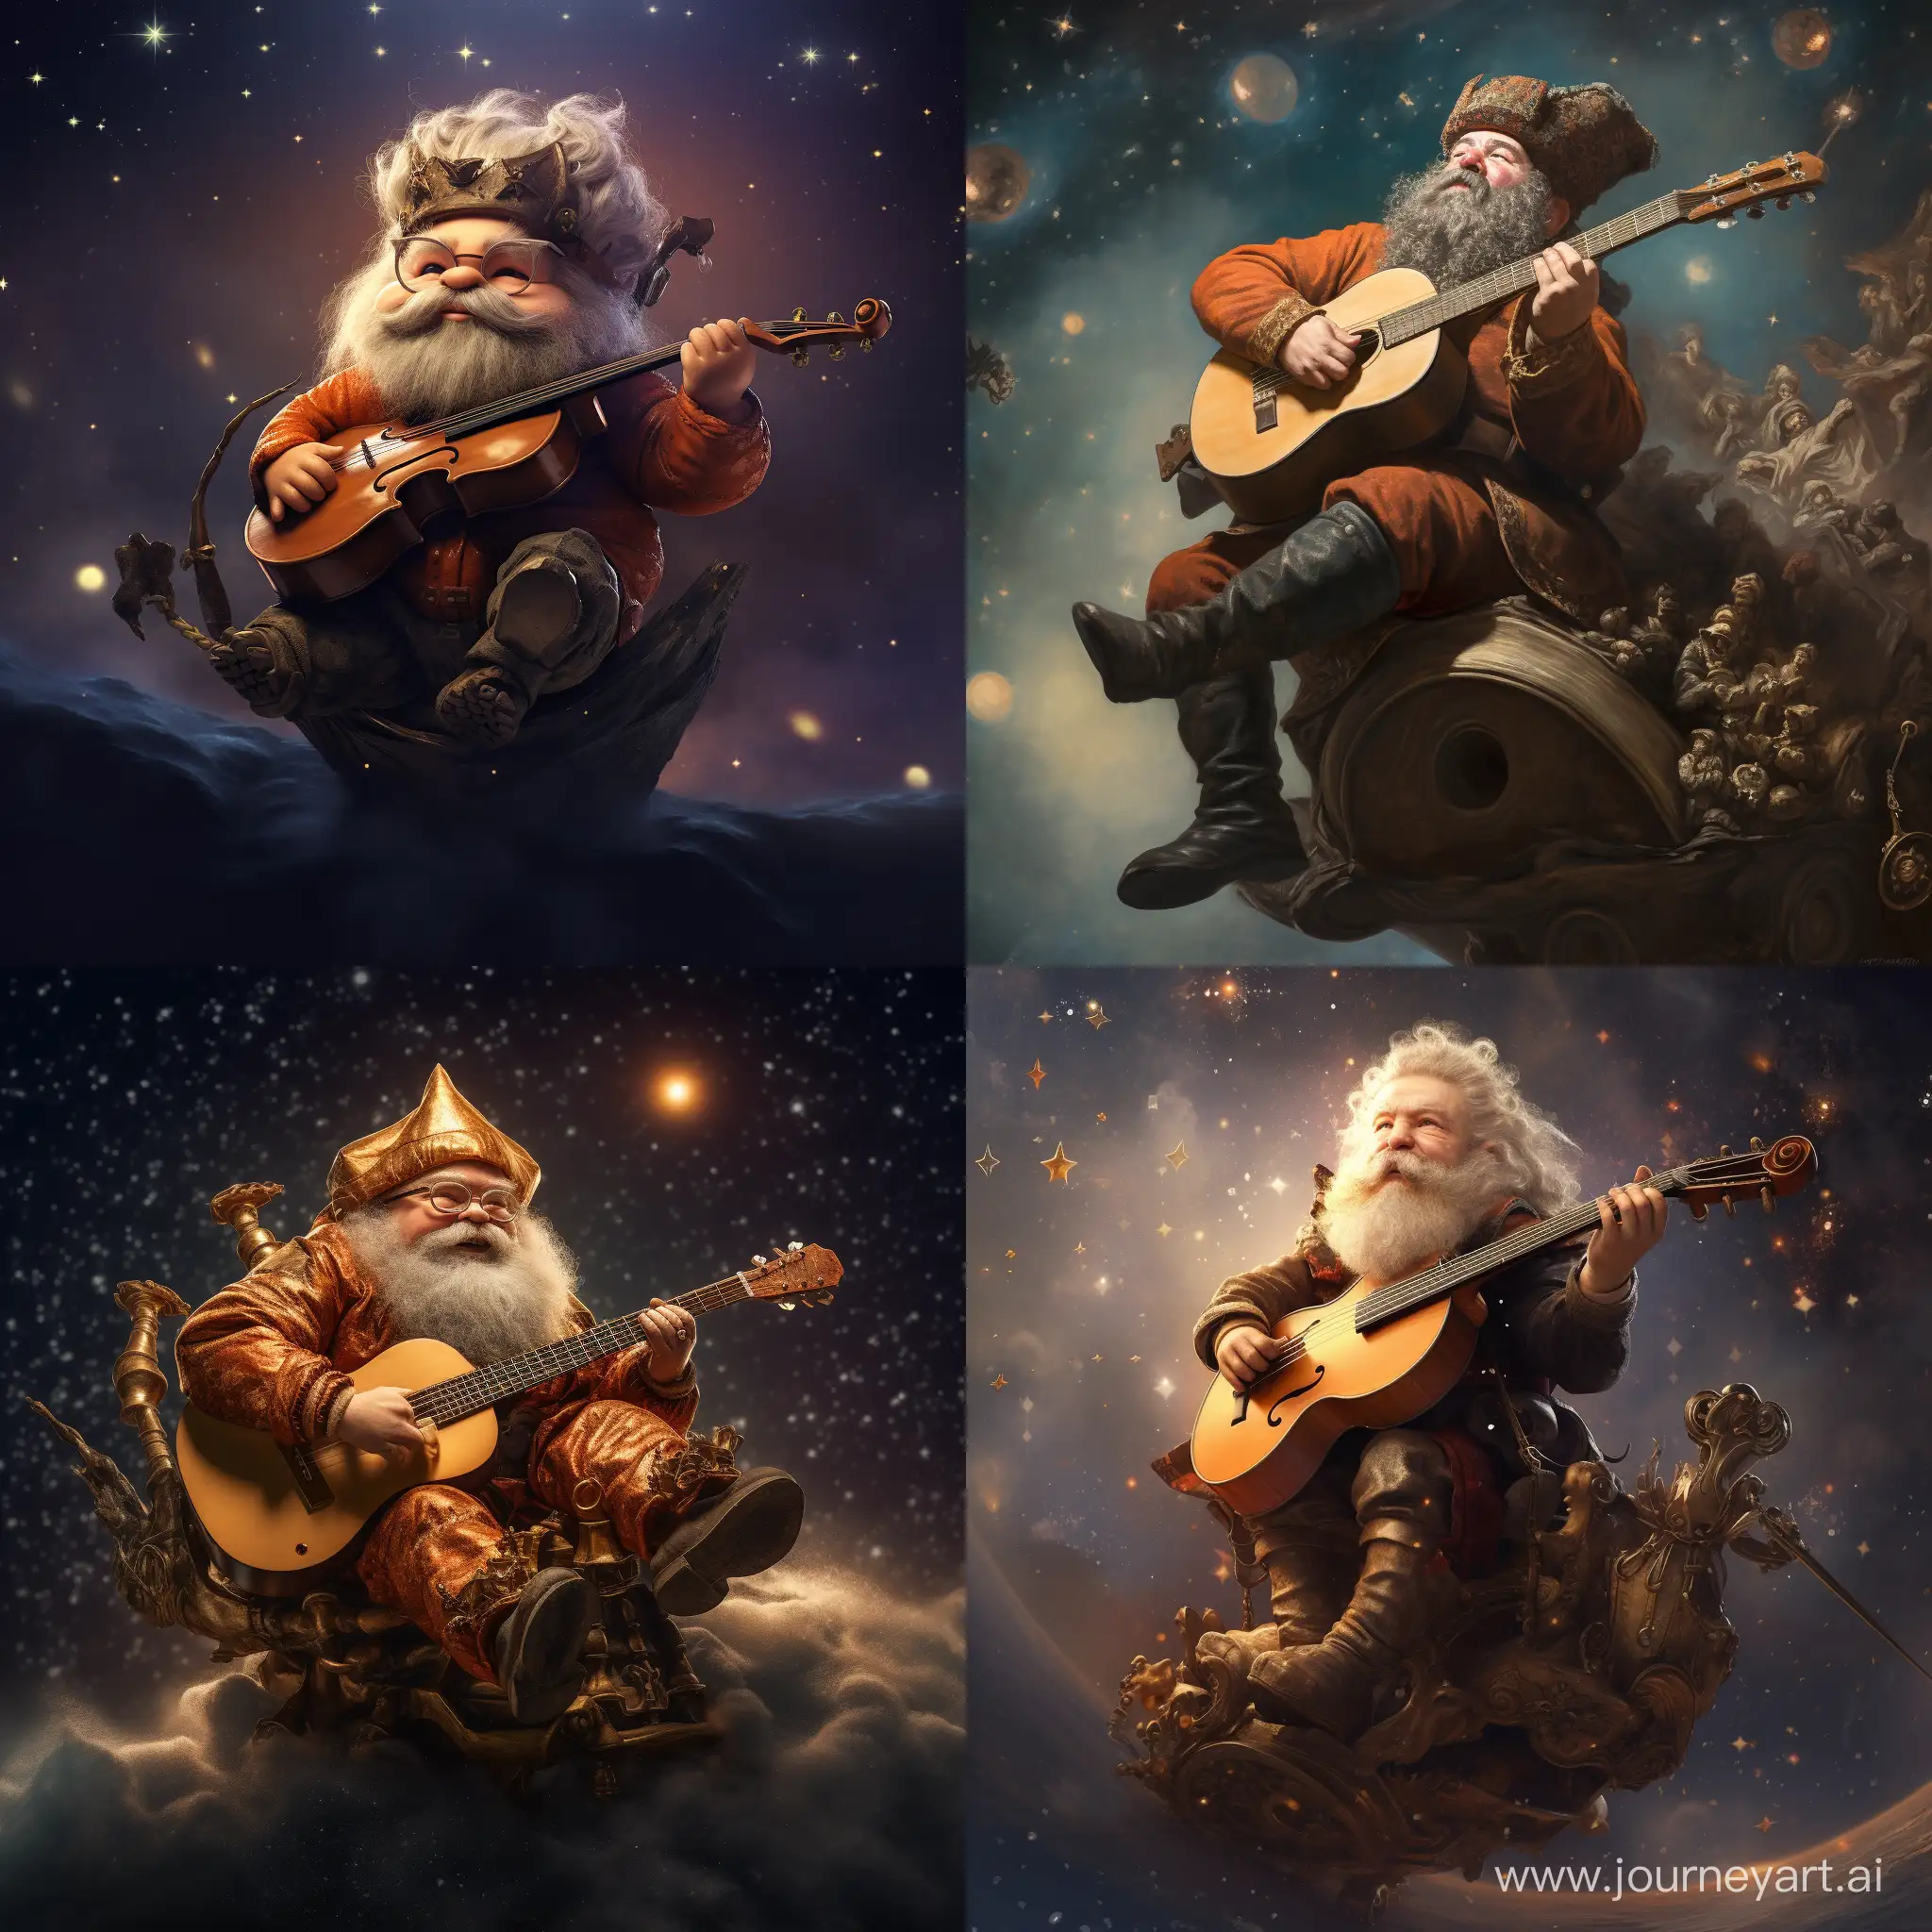 Enchanting-Dwarf-Musician-Riding-on-a-Star